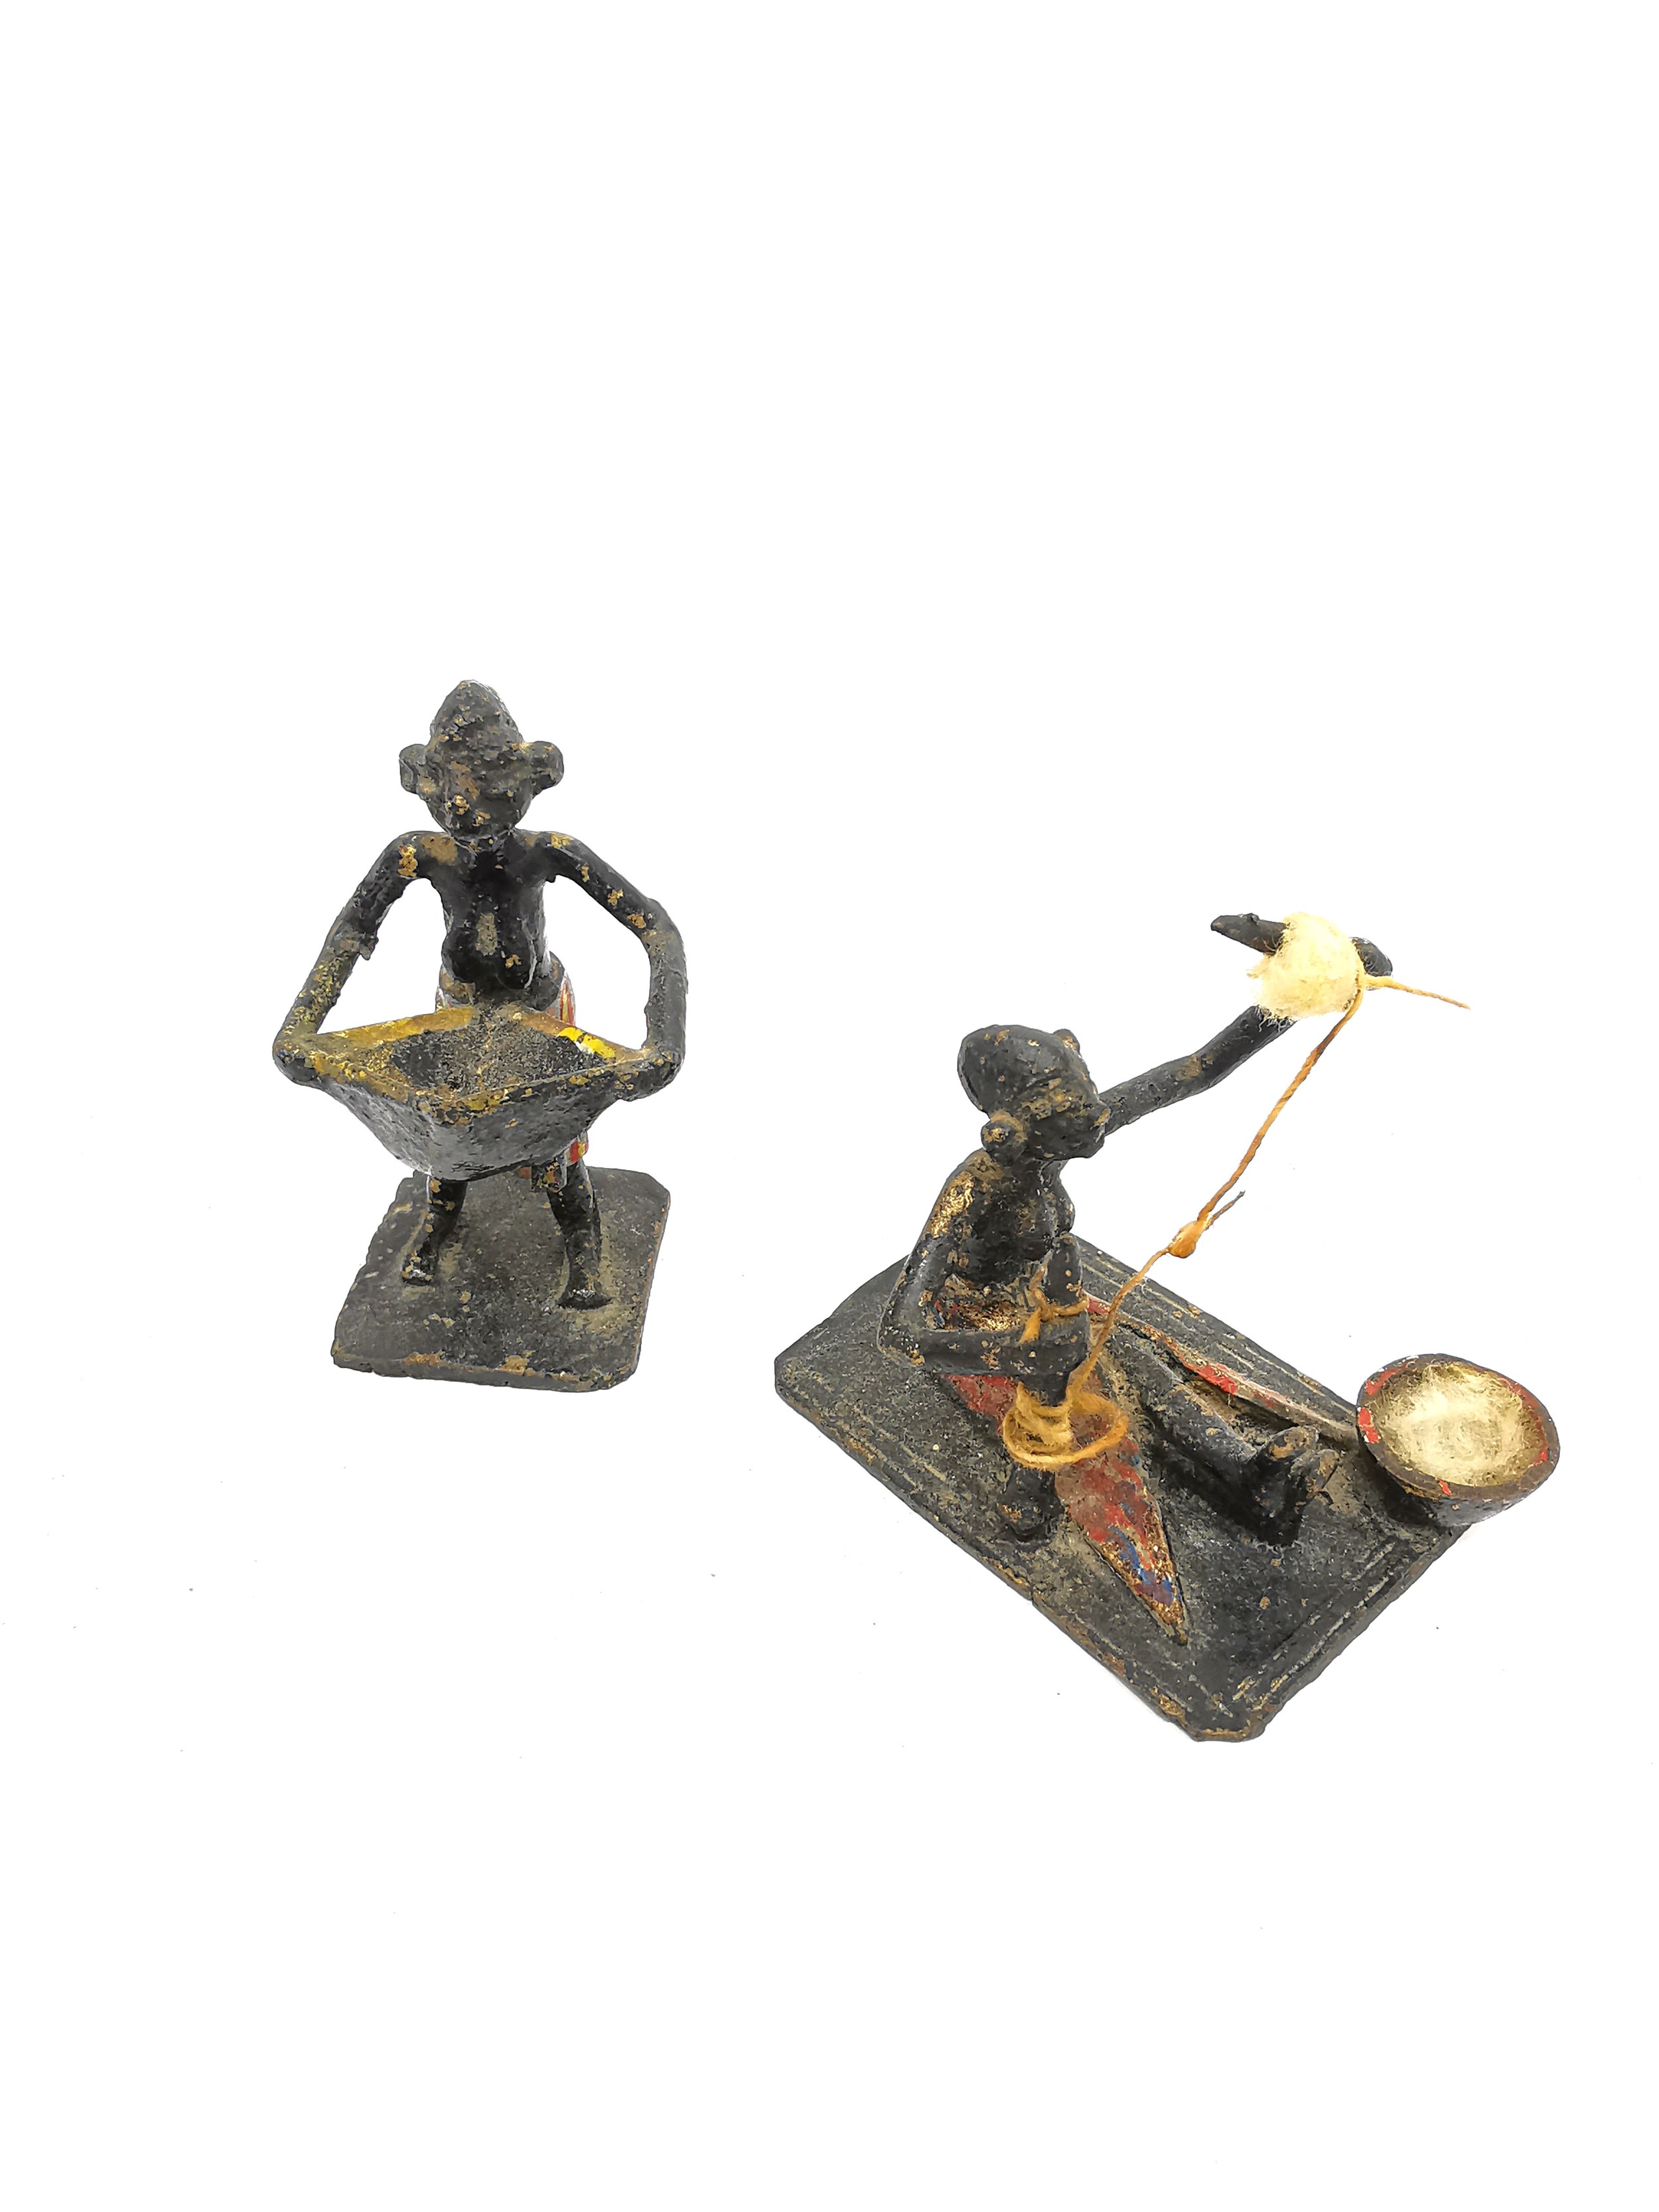 Seven miniature African tribal painted metal figures depicting various everyday activities. - Image 3 of 4